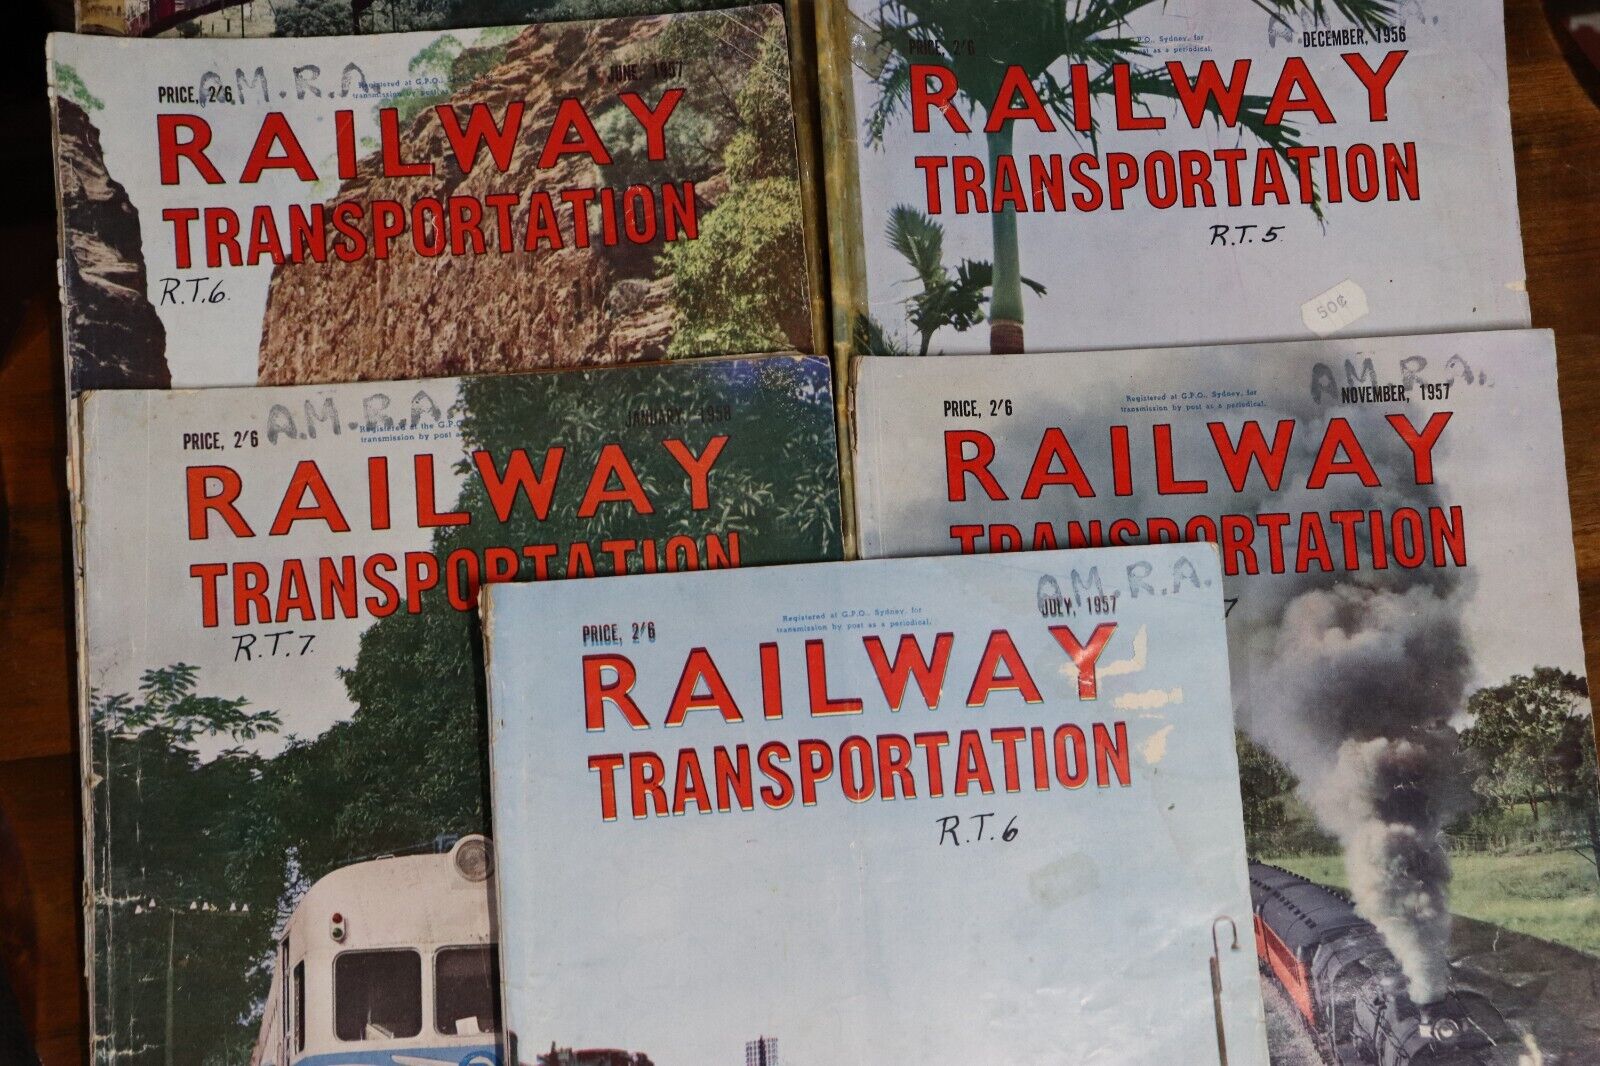 Railway Transportation Magazines x 7 Issues - Australian Rail History Book